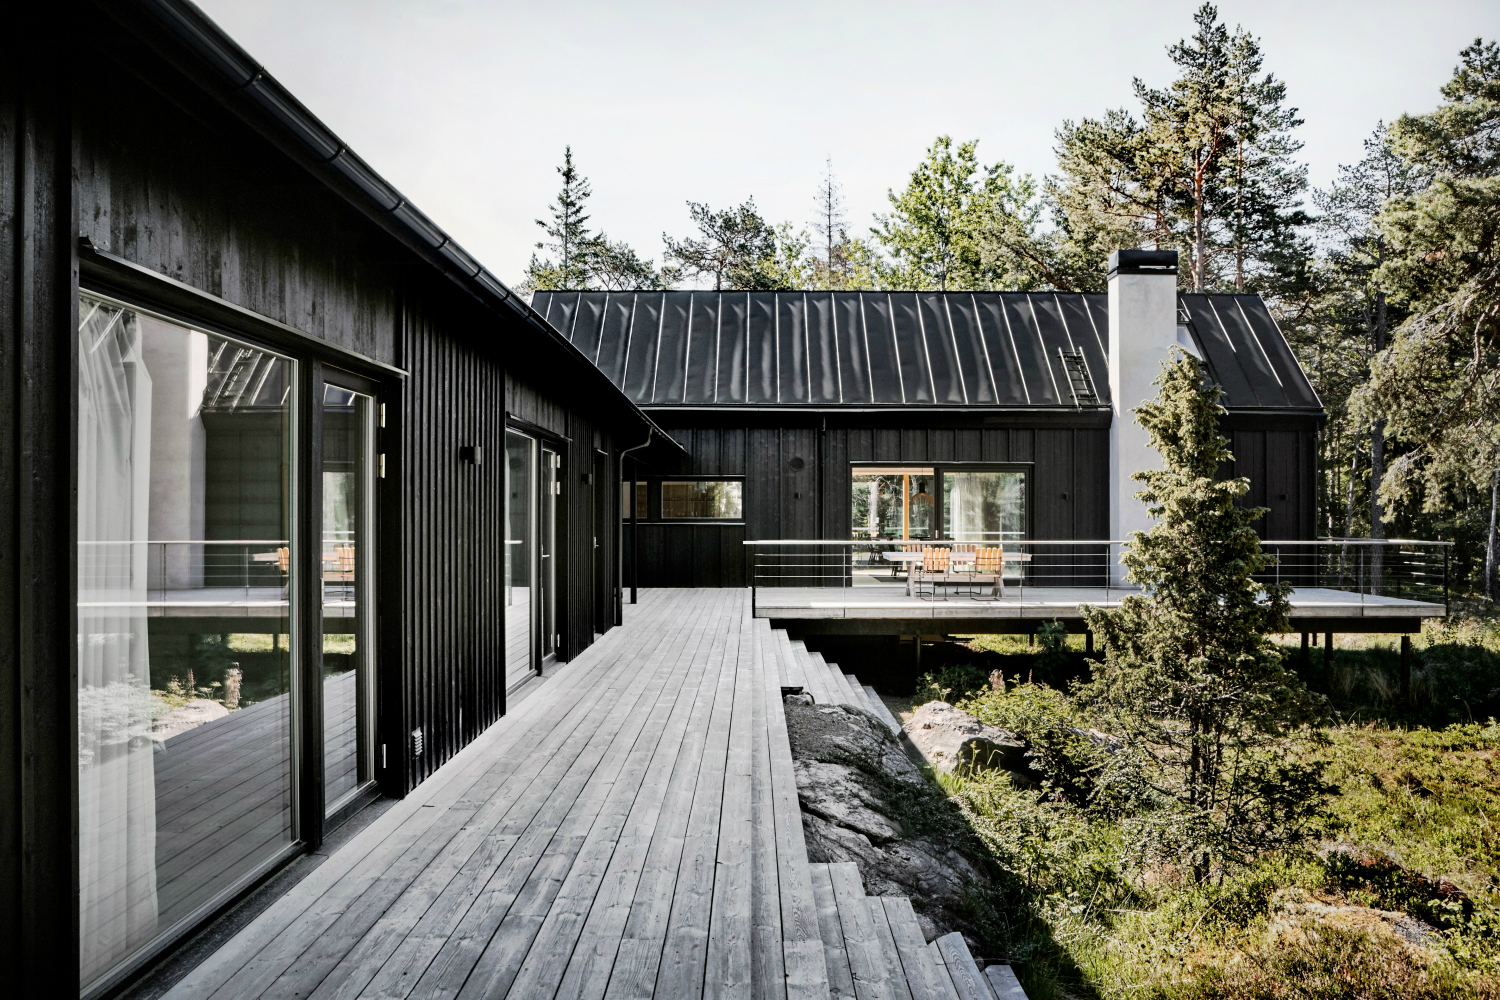 archipelago sommarhus swedish cabin kod arkitekter summerhouse 2